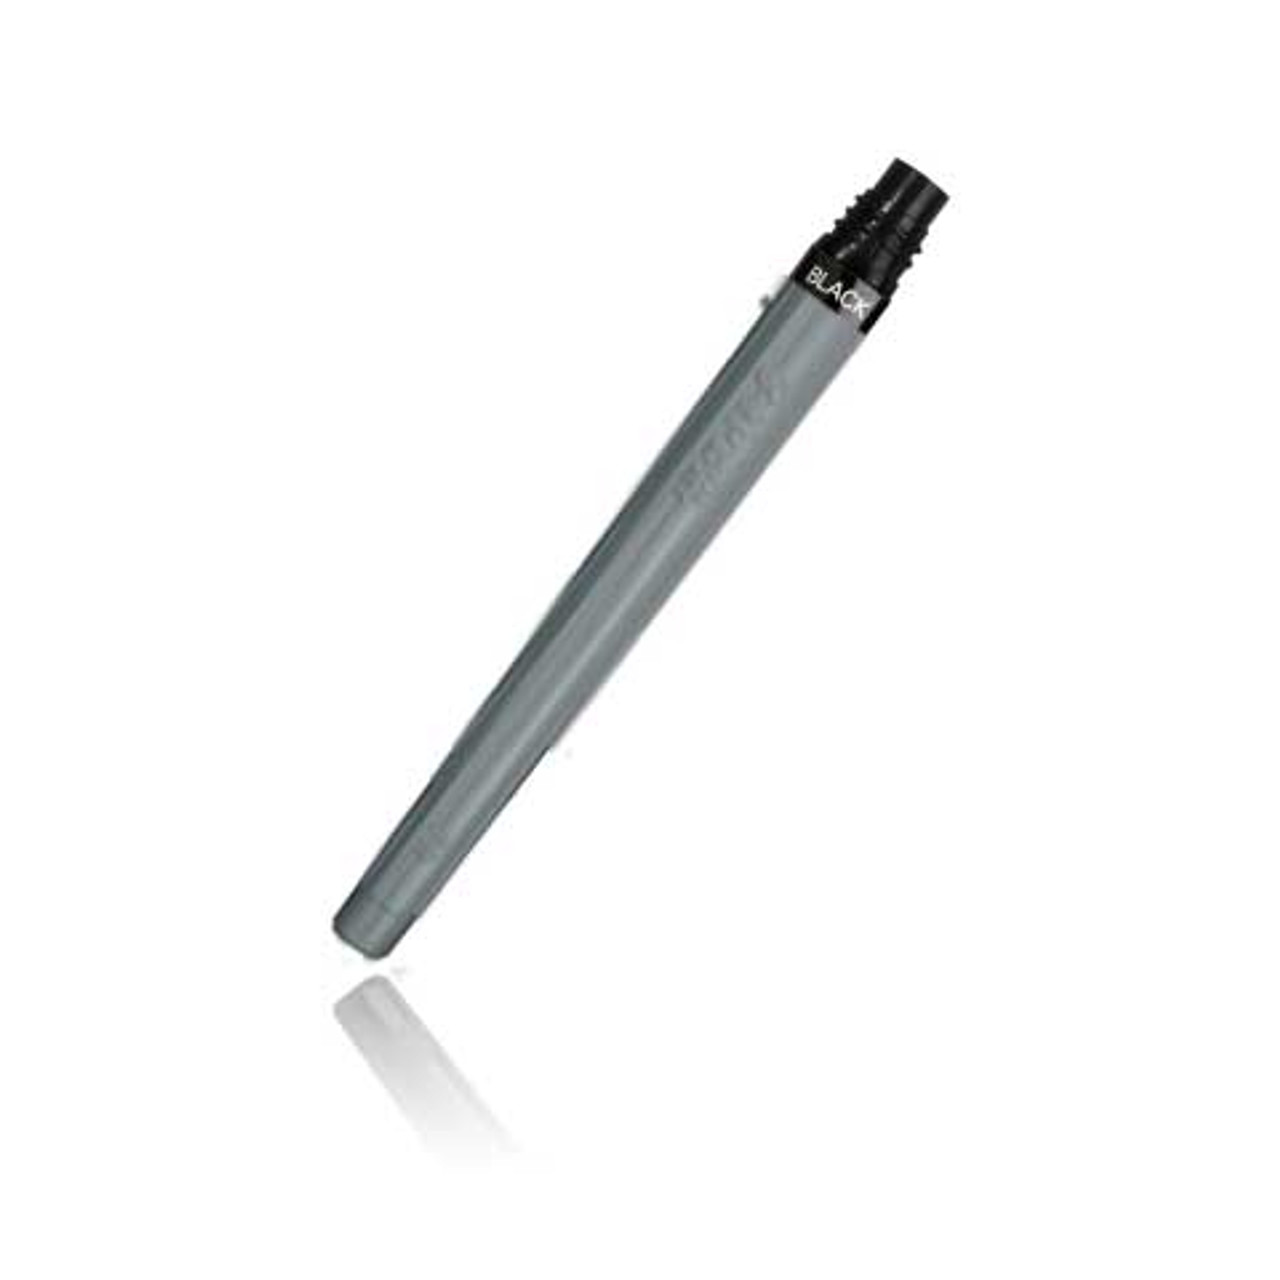 Pentel Pocket Brush Pen W/Two Refills Sepia Ink - Wet Paint